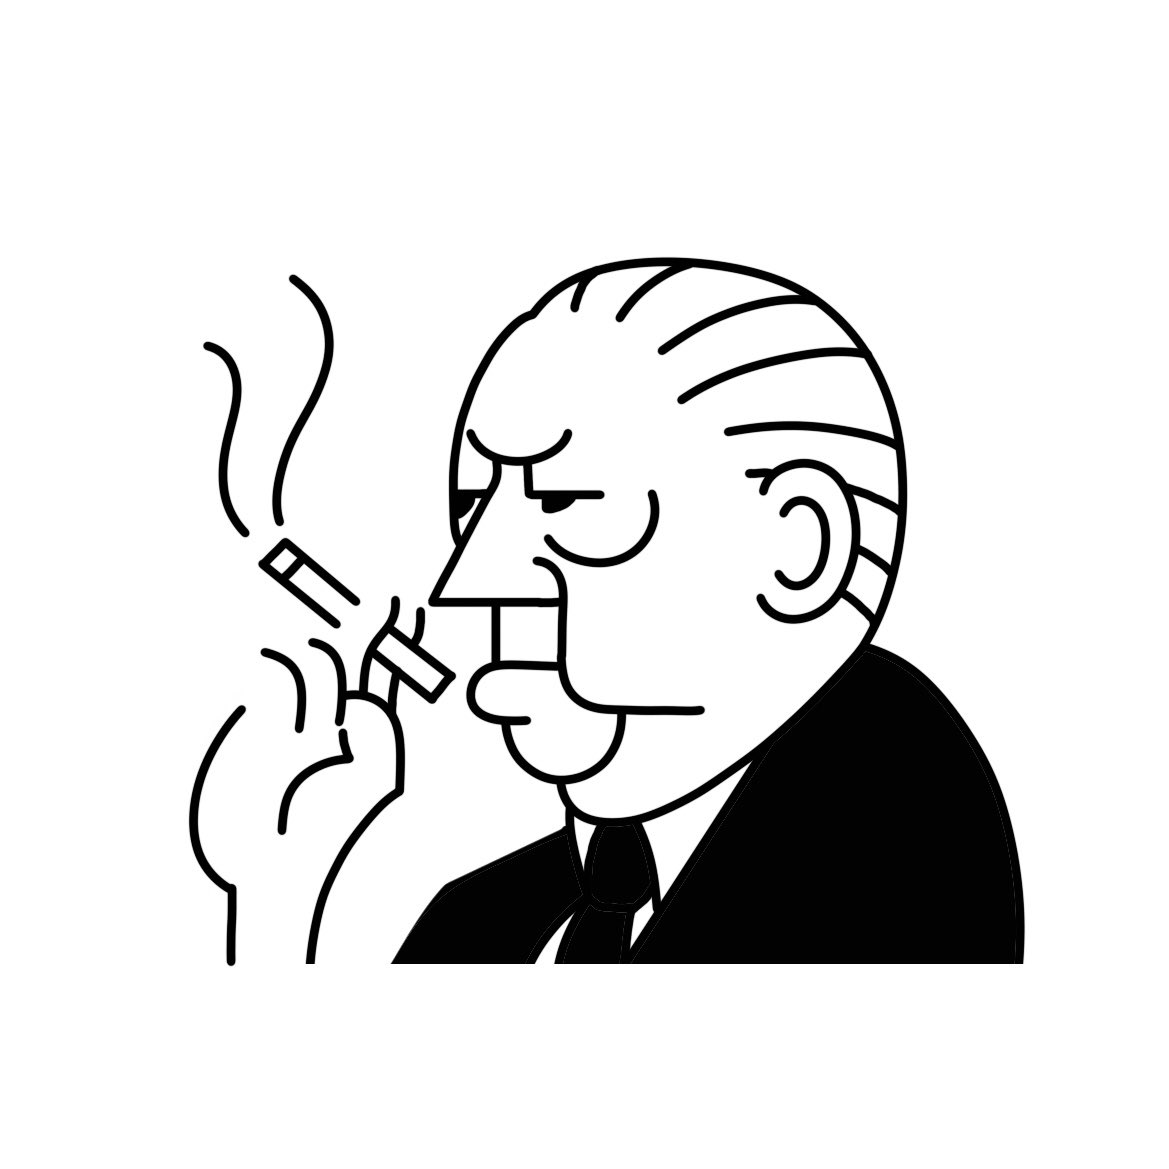 LessしたらMoreした気がする
#Mies #illustration #architecture 